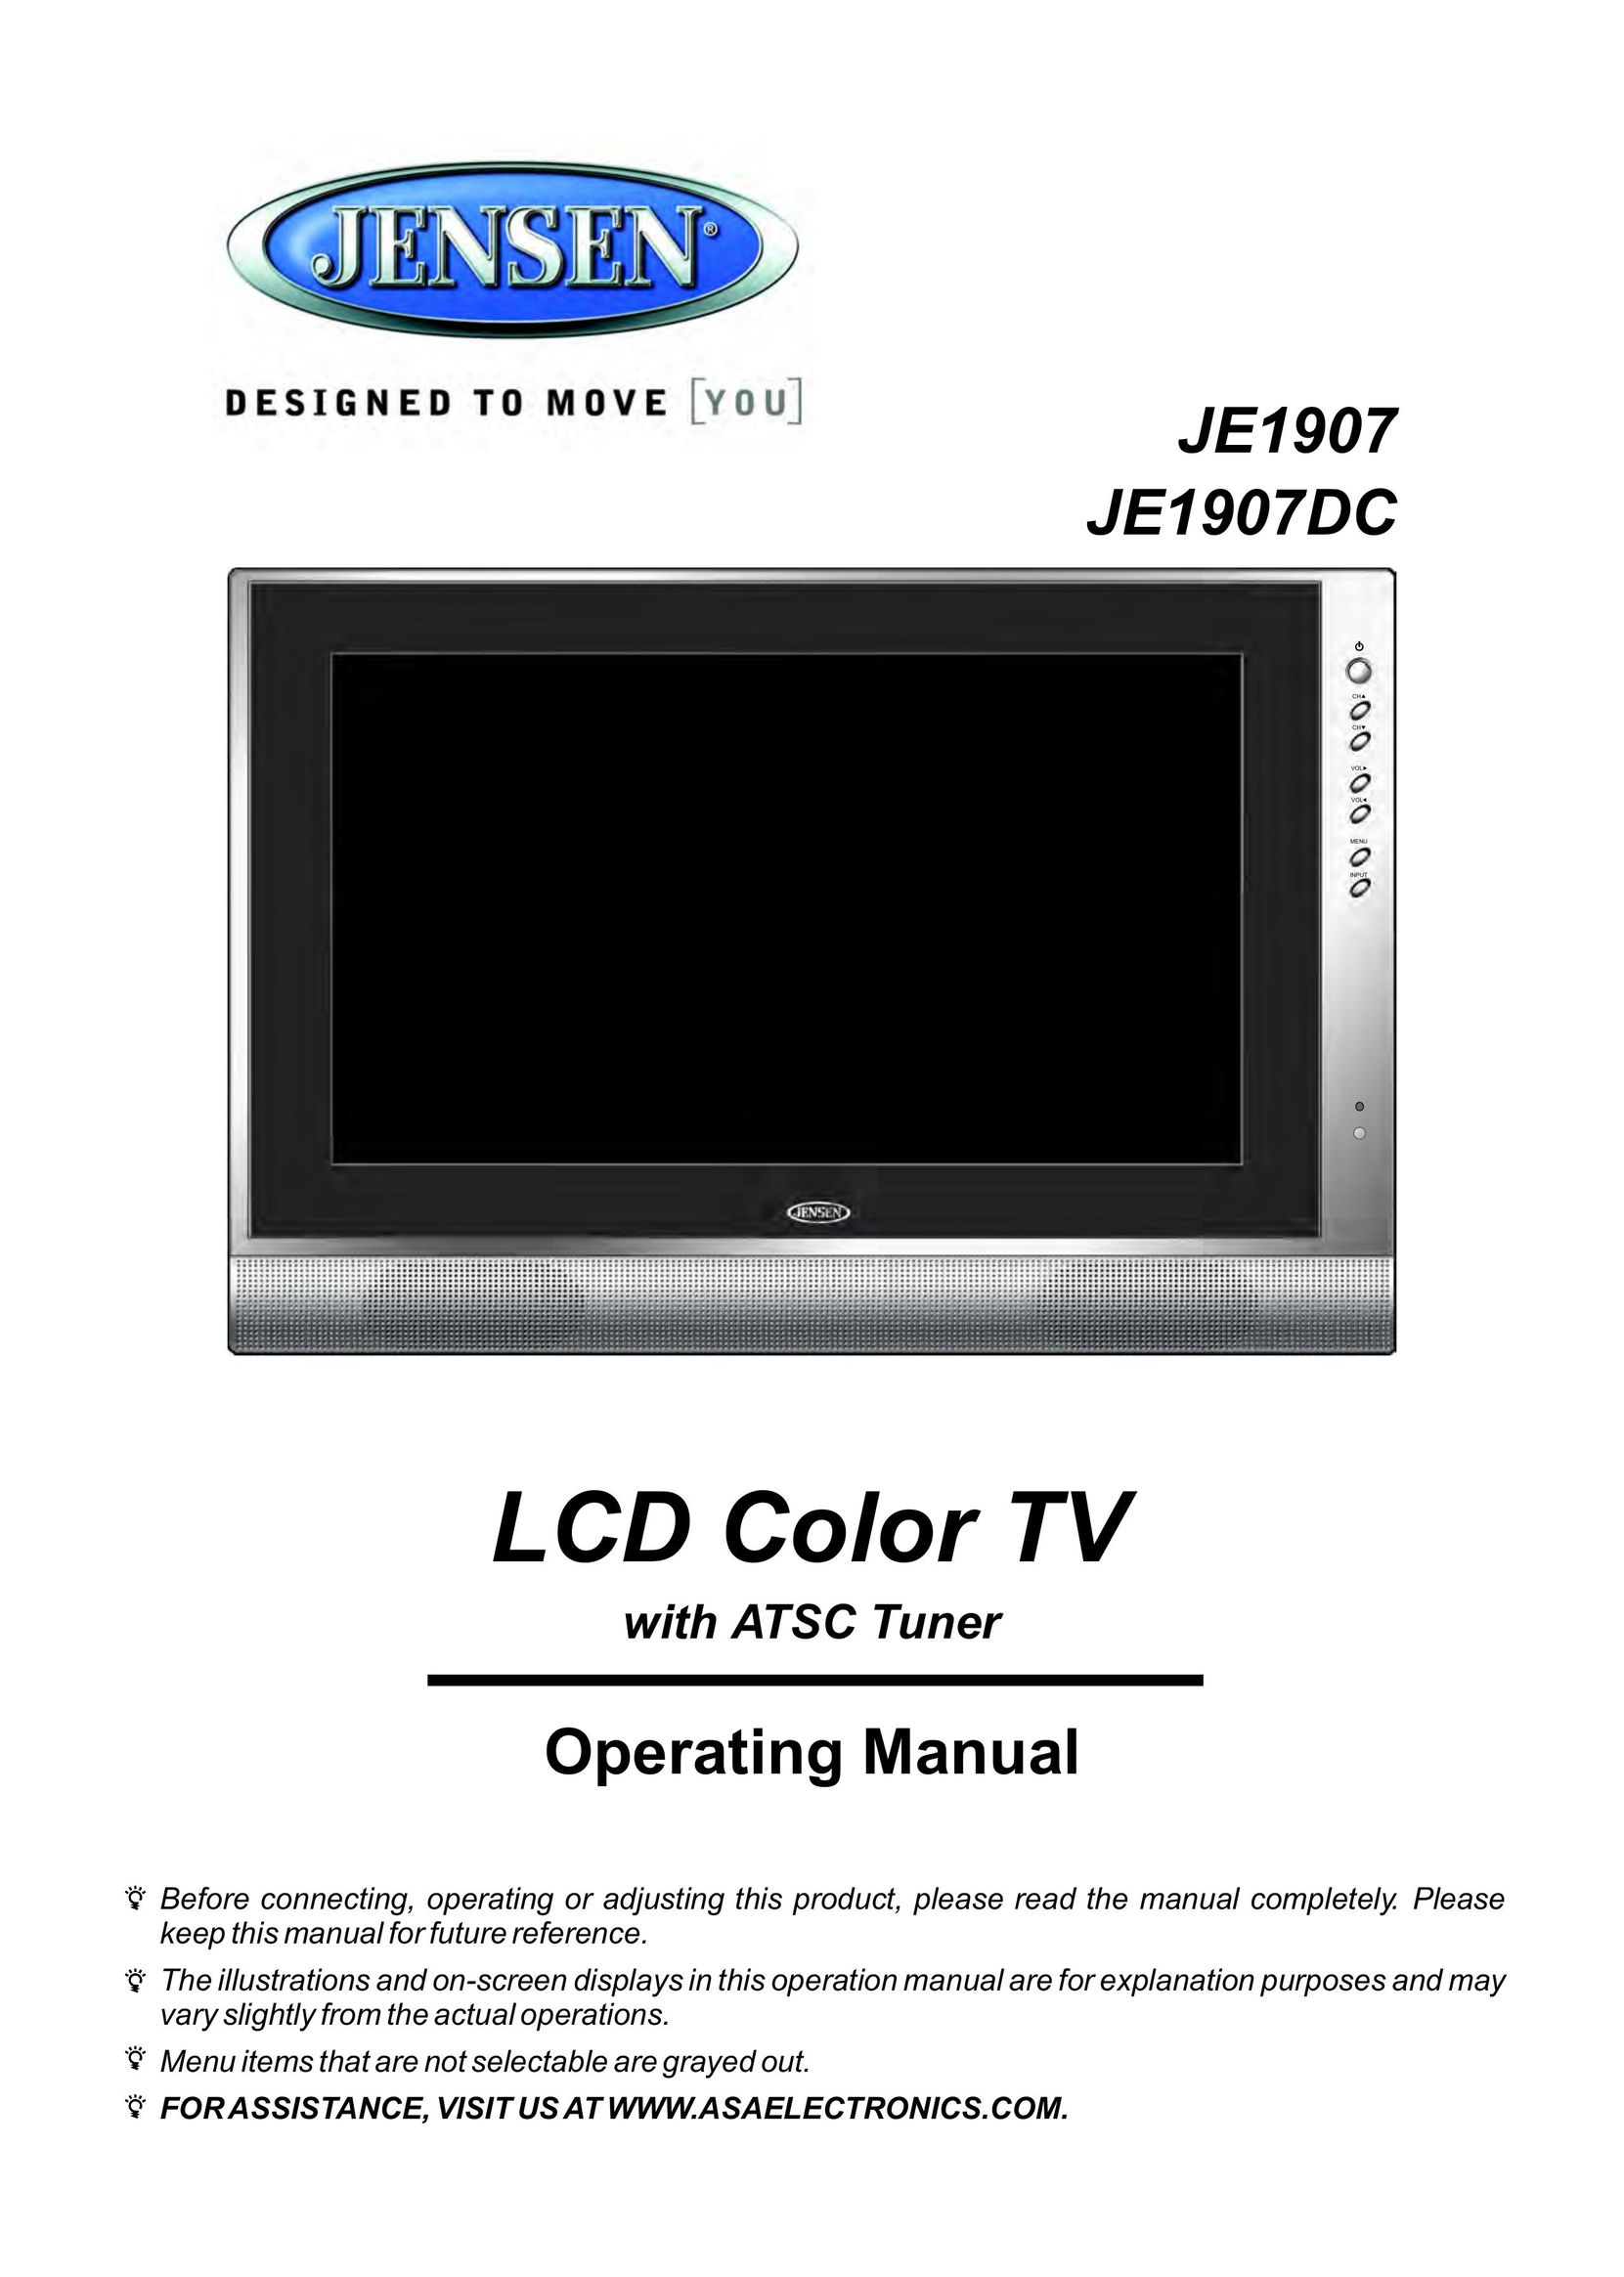 Jensen JE1907DC Flat Panel Television User Manual